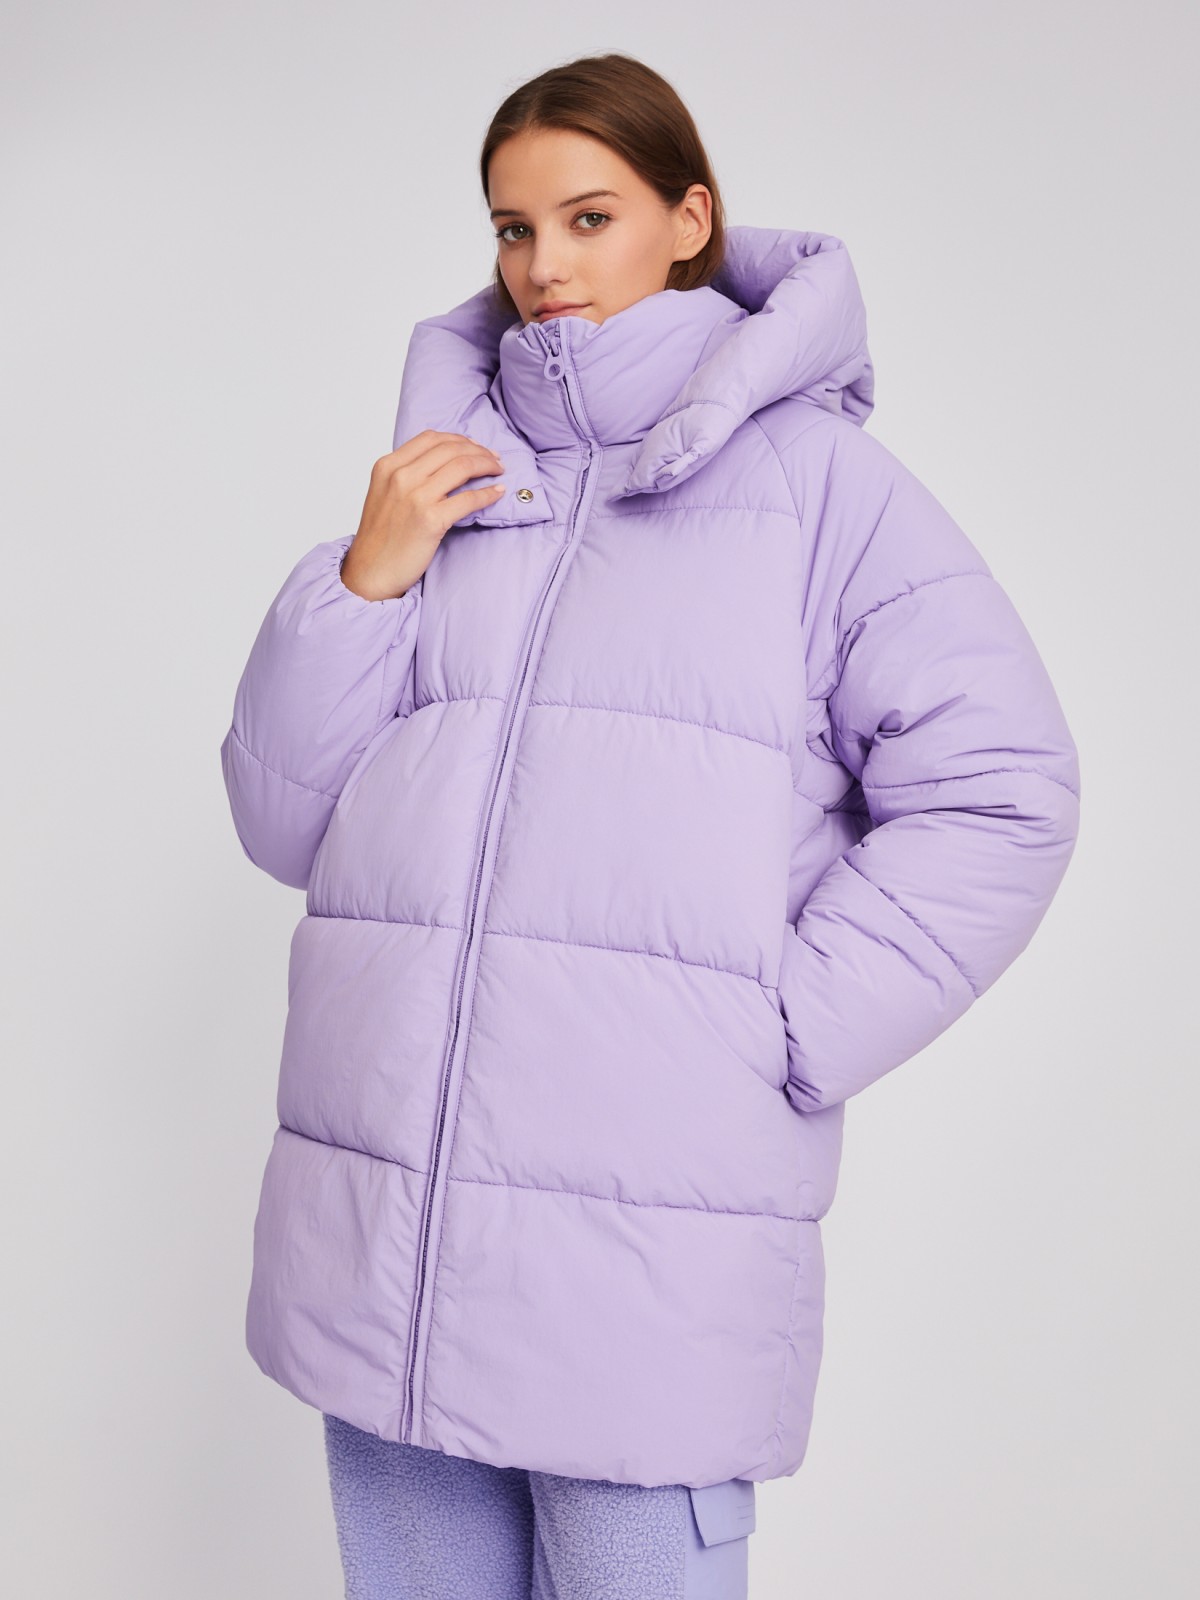 Тёплая куртка-пальто оверсайз силуэта с капюшоном zolla 02342520L054, цвет фиолетовый, размер S - фото 3